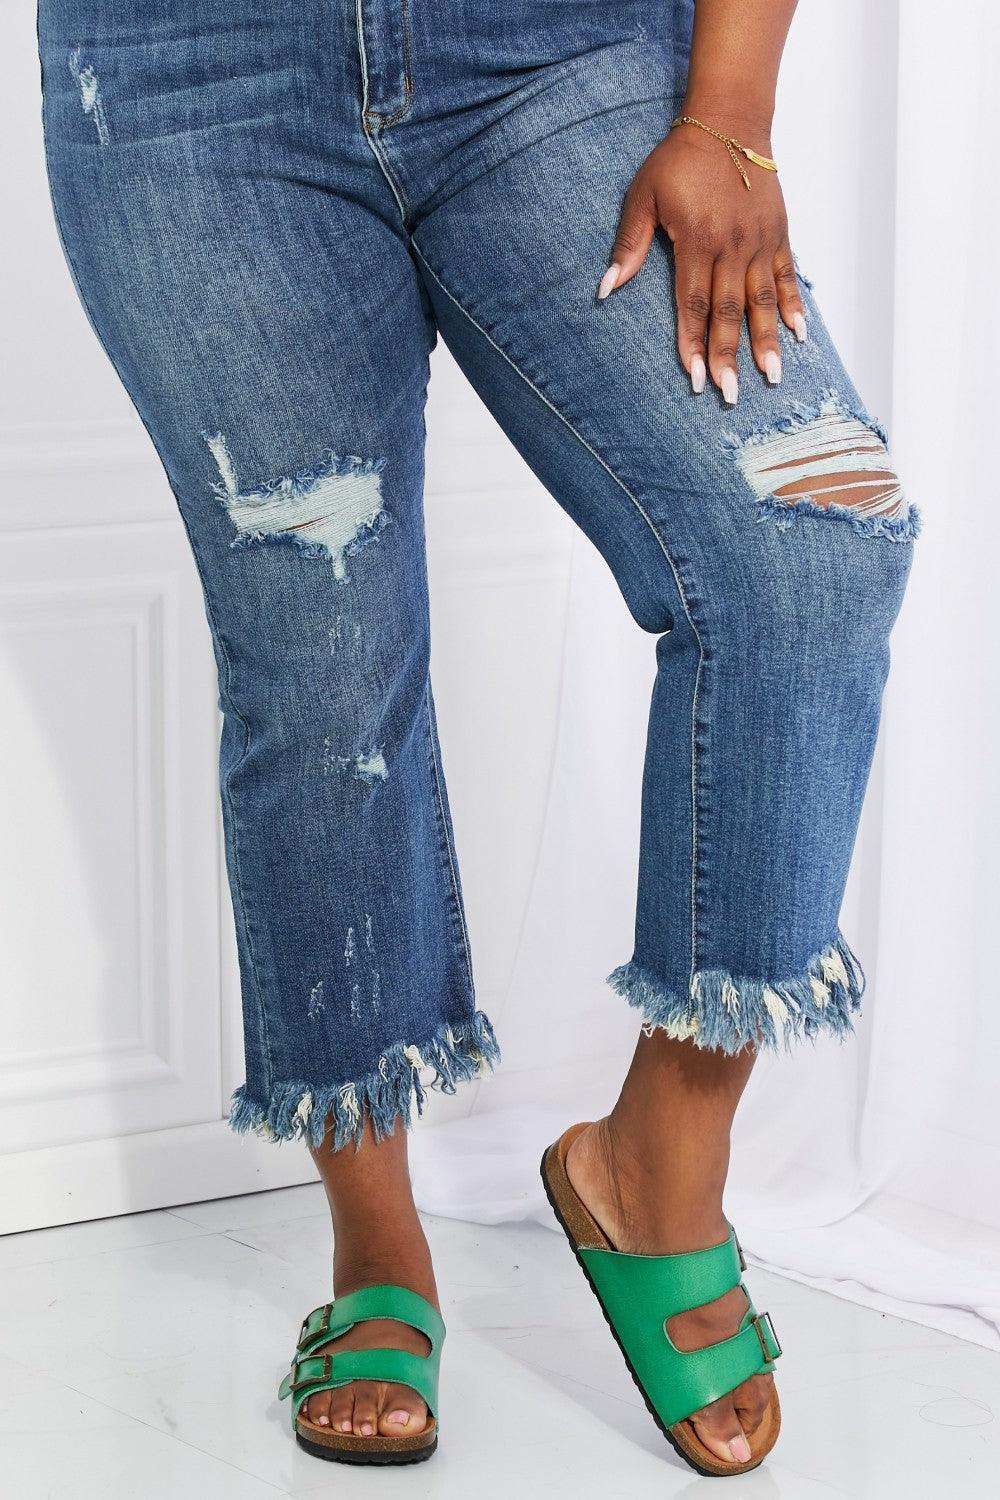 Chummy Plus Size Distressed Cropped Jeans - MXSTUDIO.COM